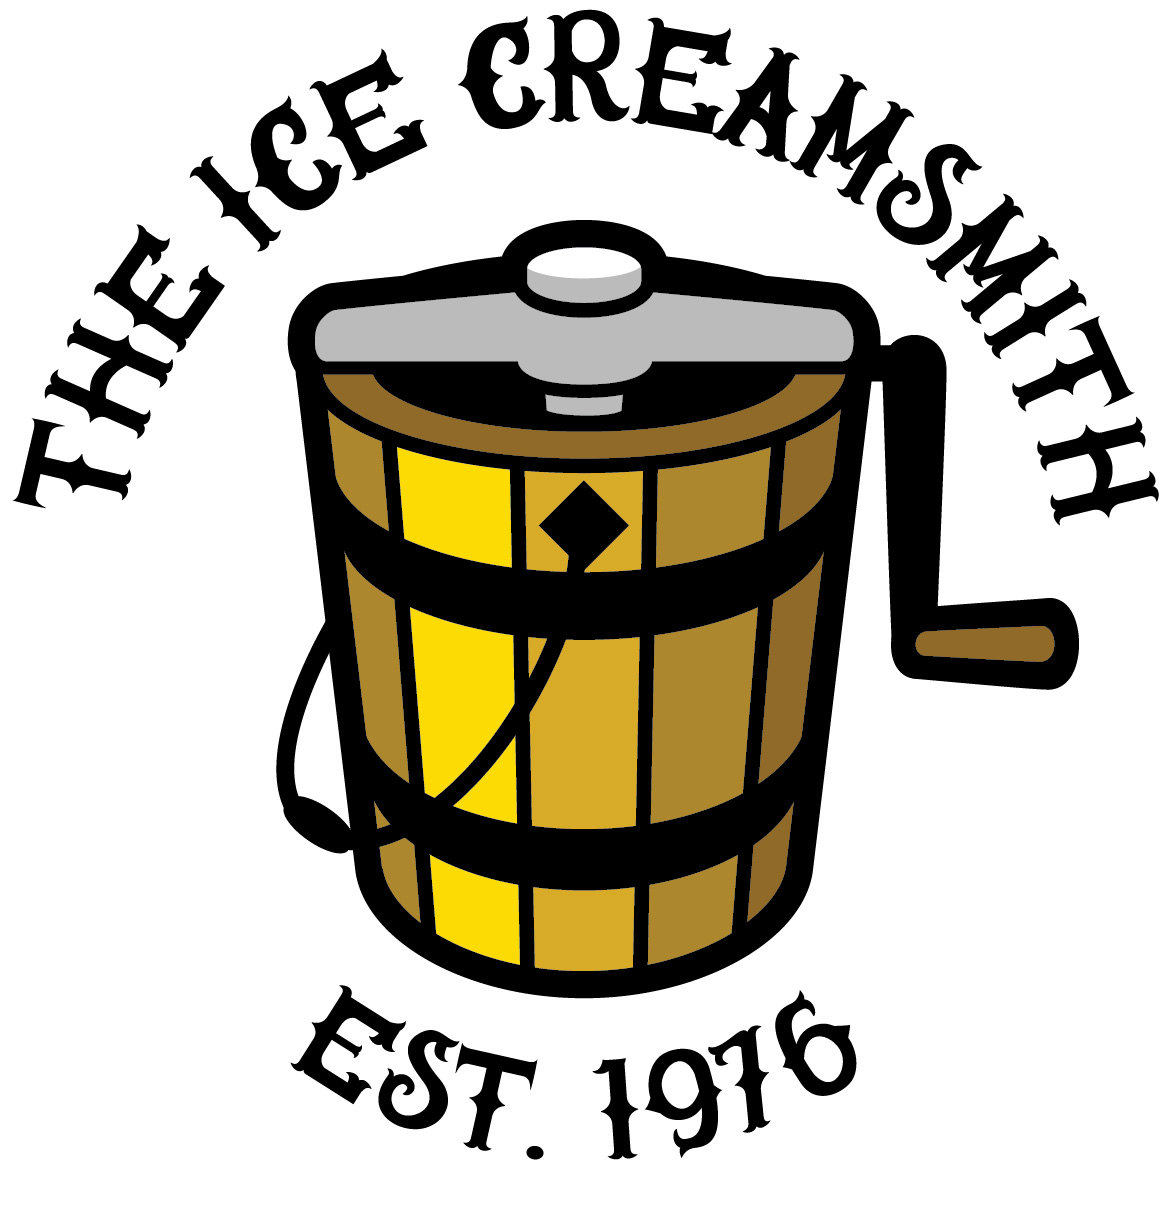 The Ice Creamsmith